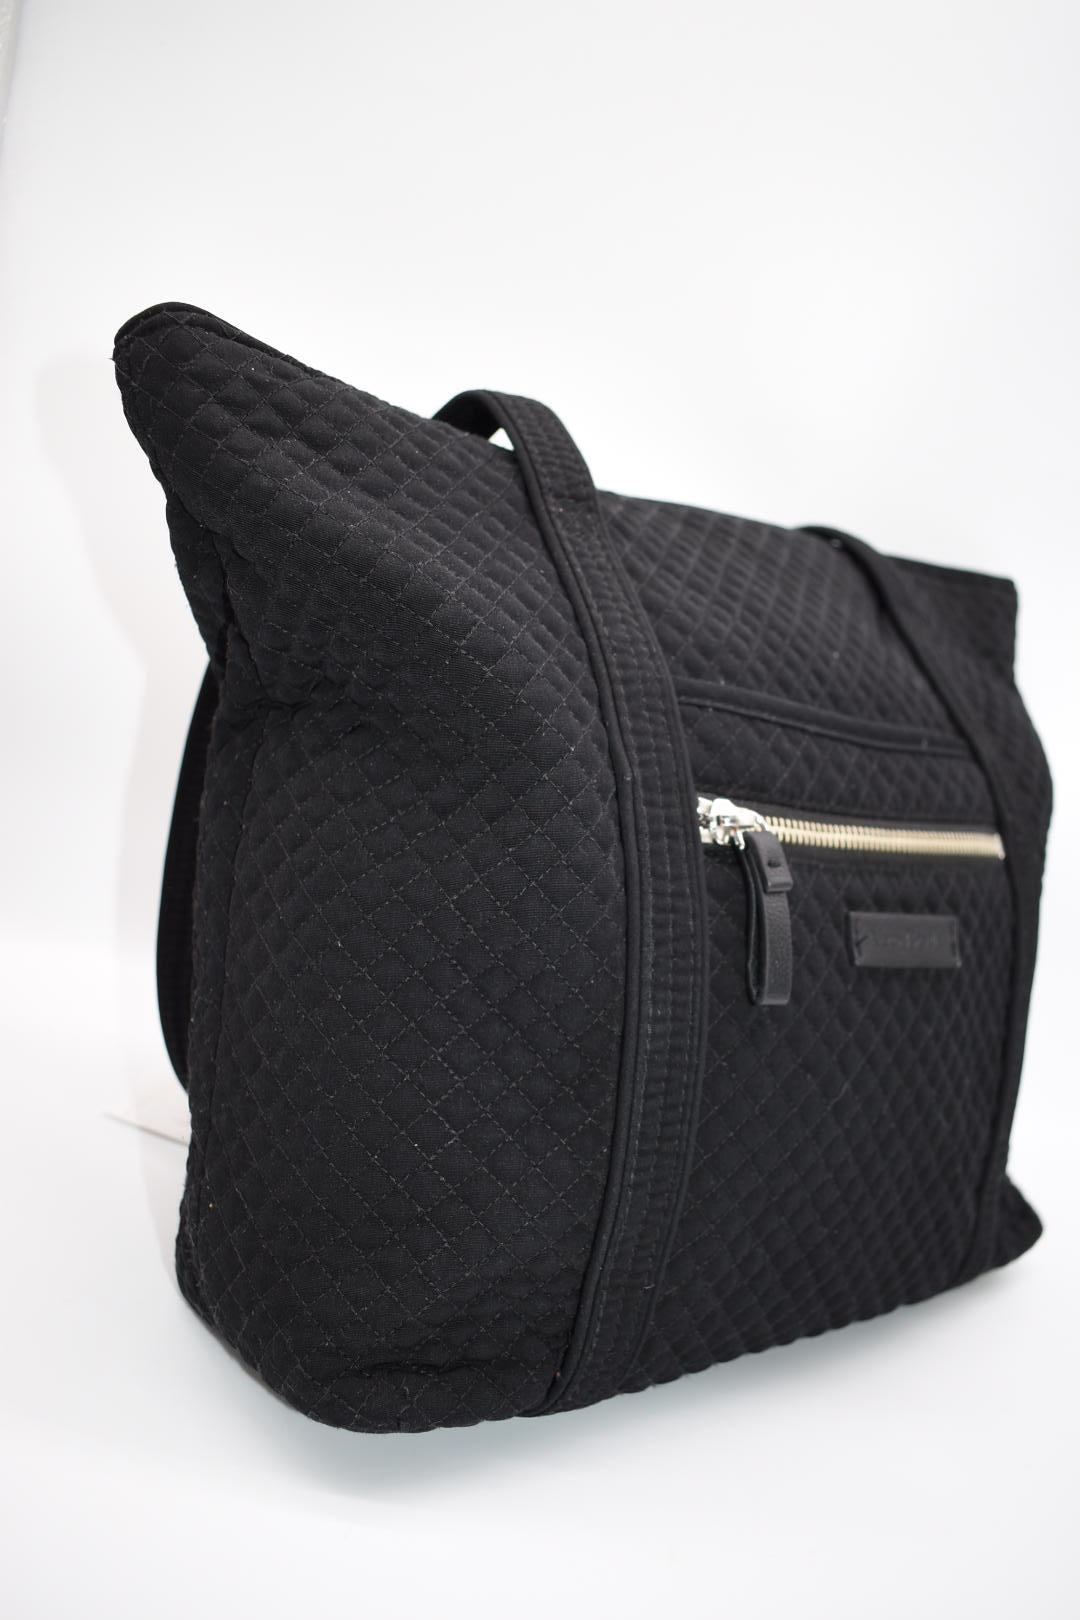 Vera Bradley Iconic Small Vera Tote Bag in Black Microfiber